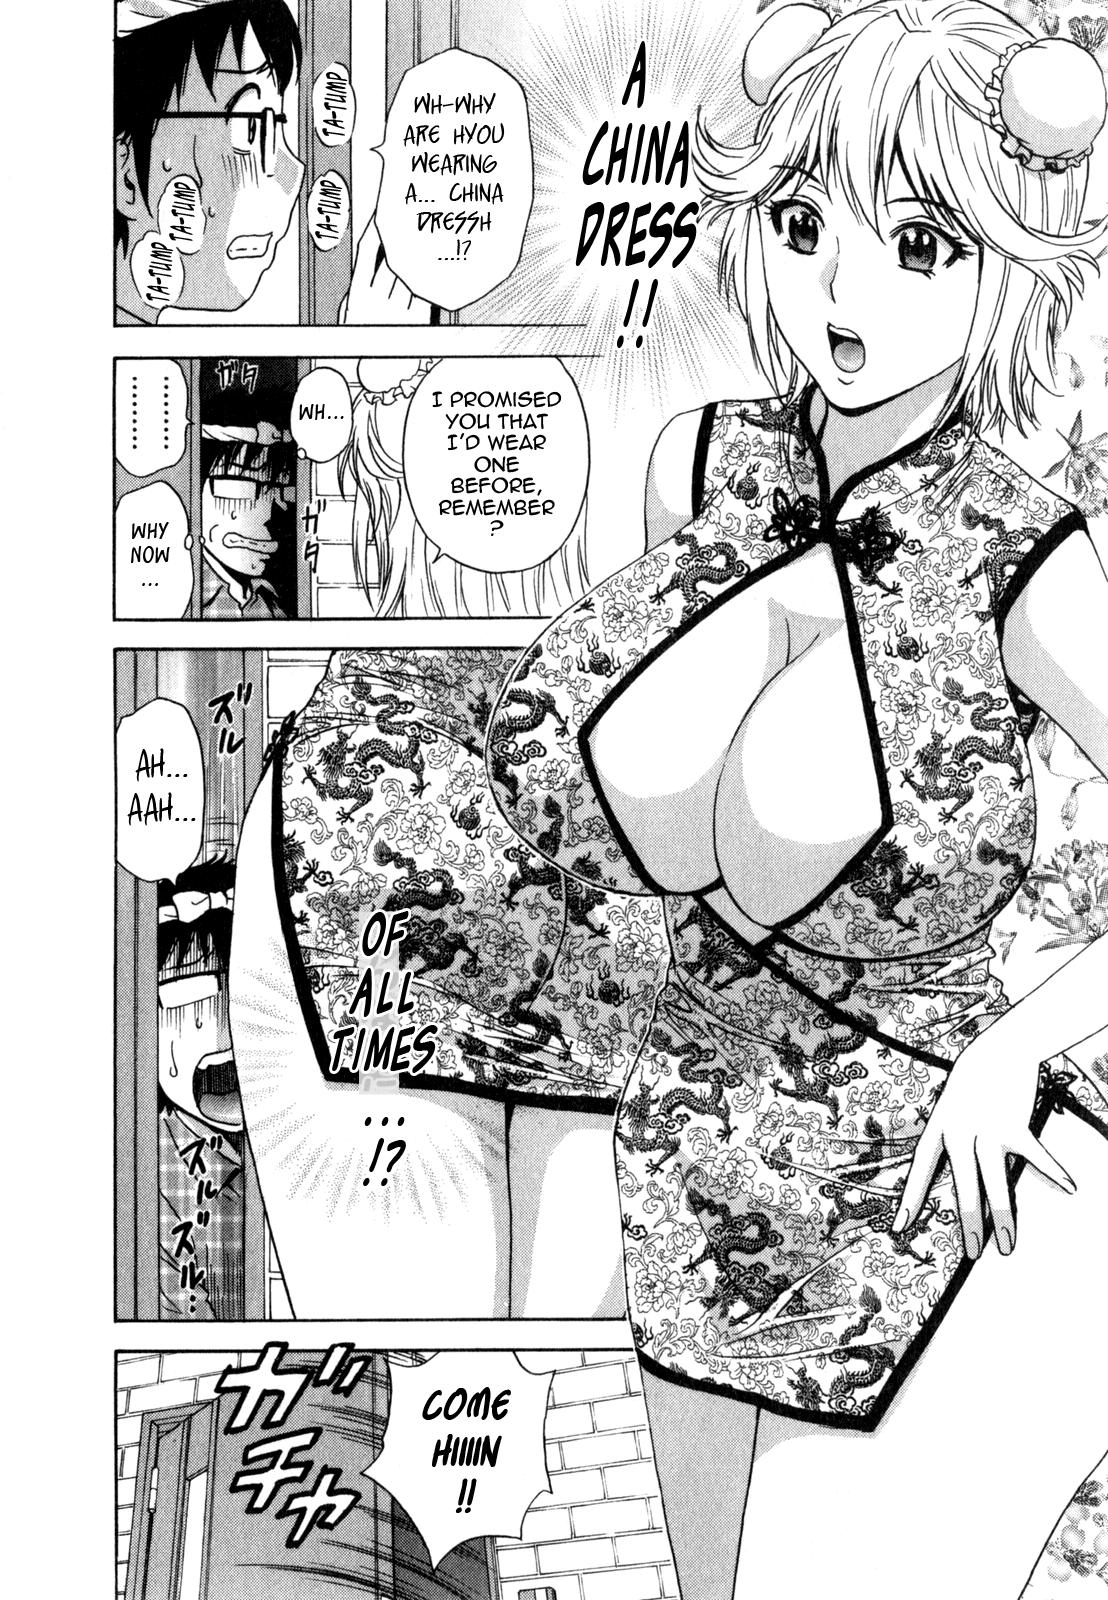 [Hidemaru] Life with Married Women Just Like a Manga 3 - Ch. 1-8 [English] {Tadanohito} 114